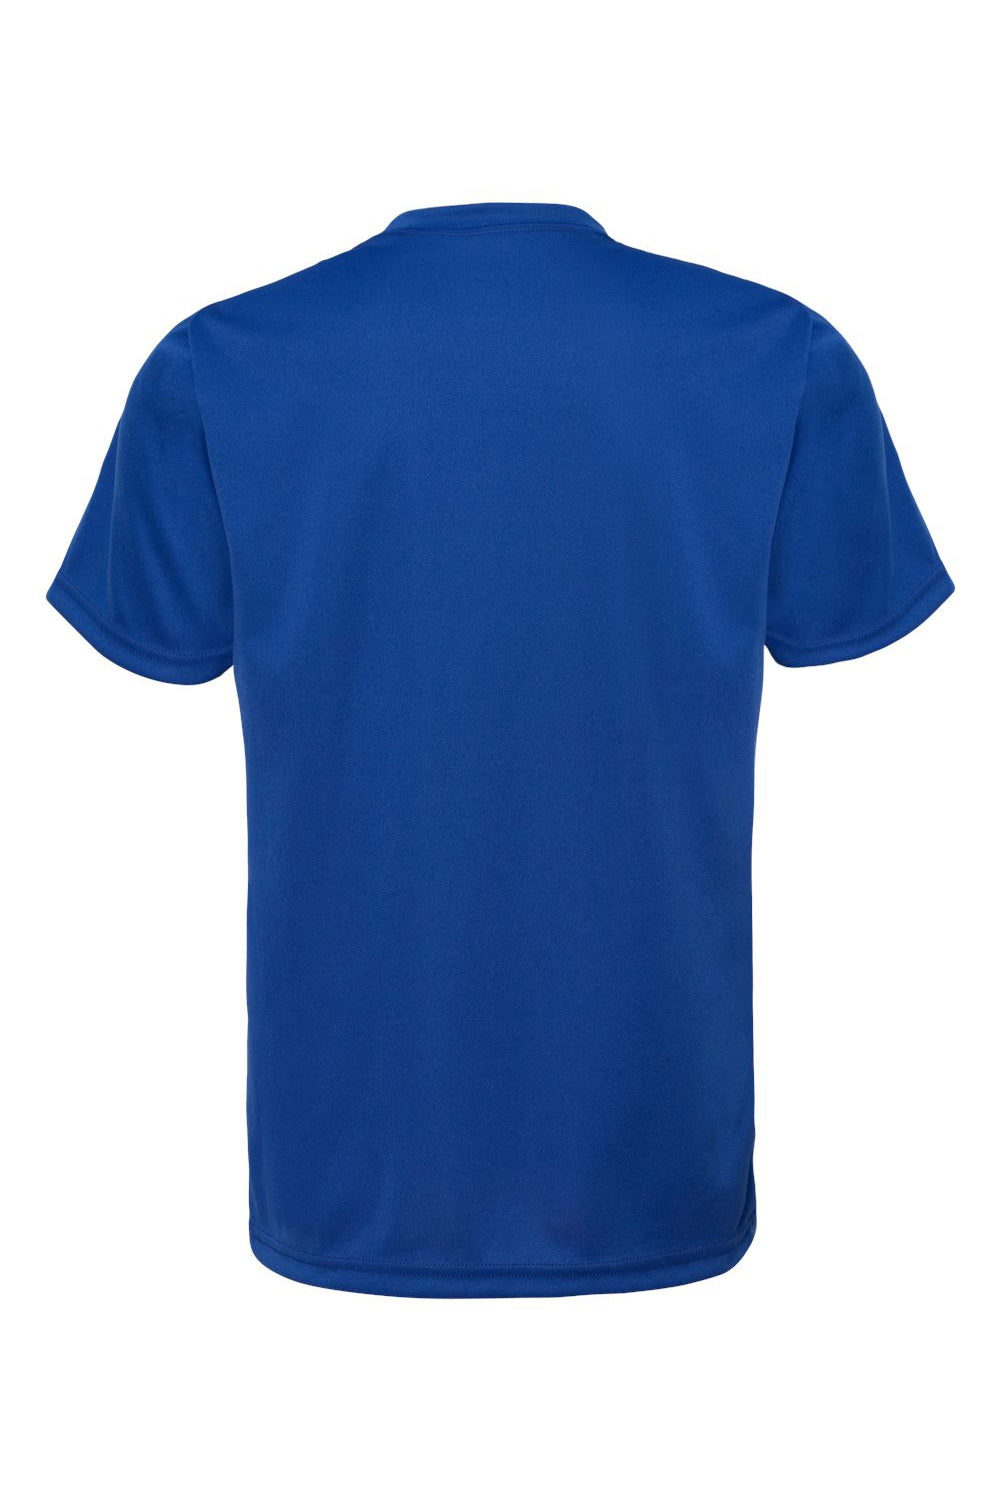 C2 Sport 5200 Youth Performance Moisture Wicking Short Sleeve Crewneck T-Shirt Royal Blue Flat Back